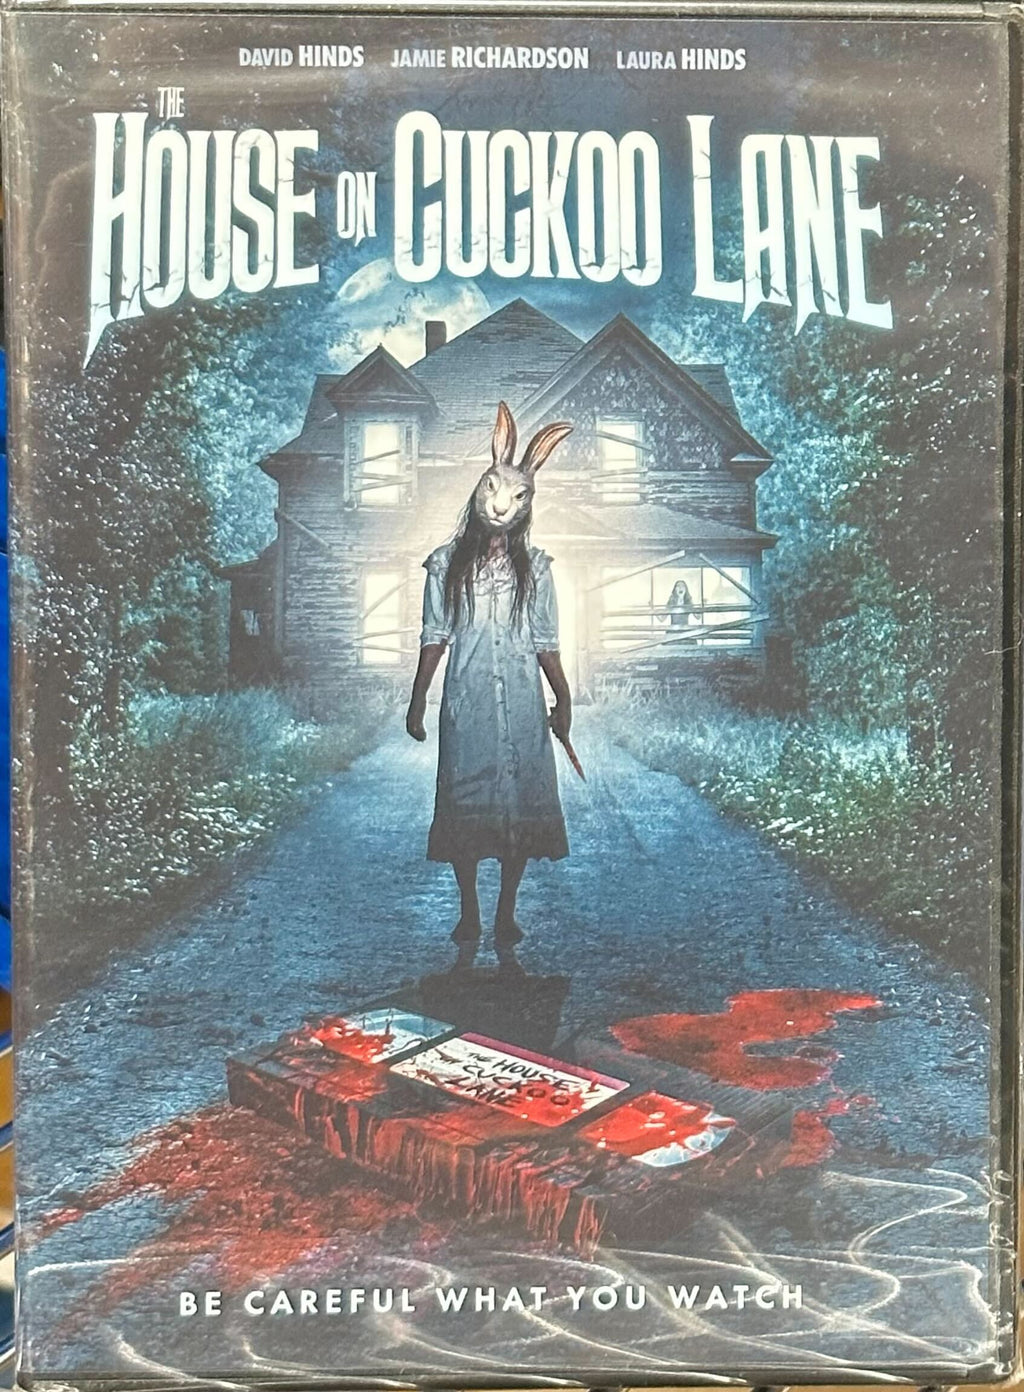 The House on Cuckoo Lane DVD